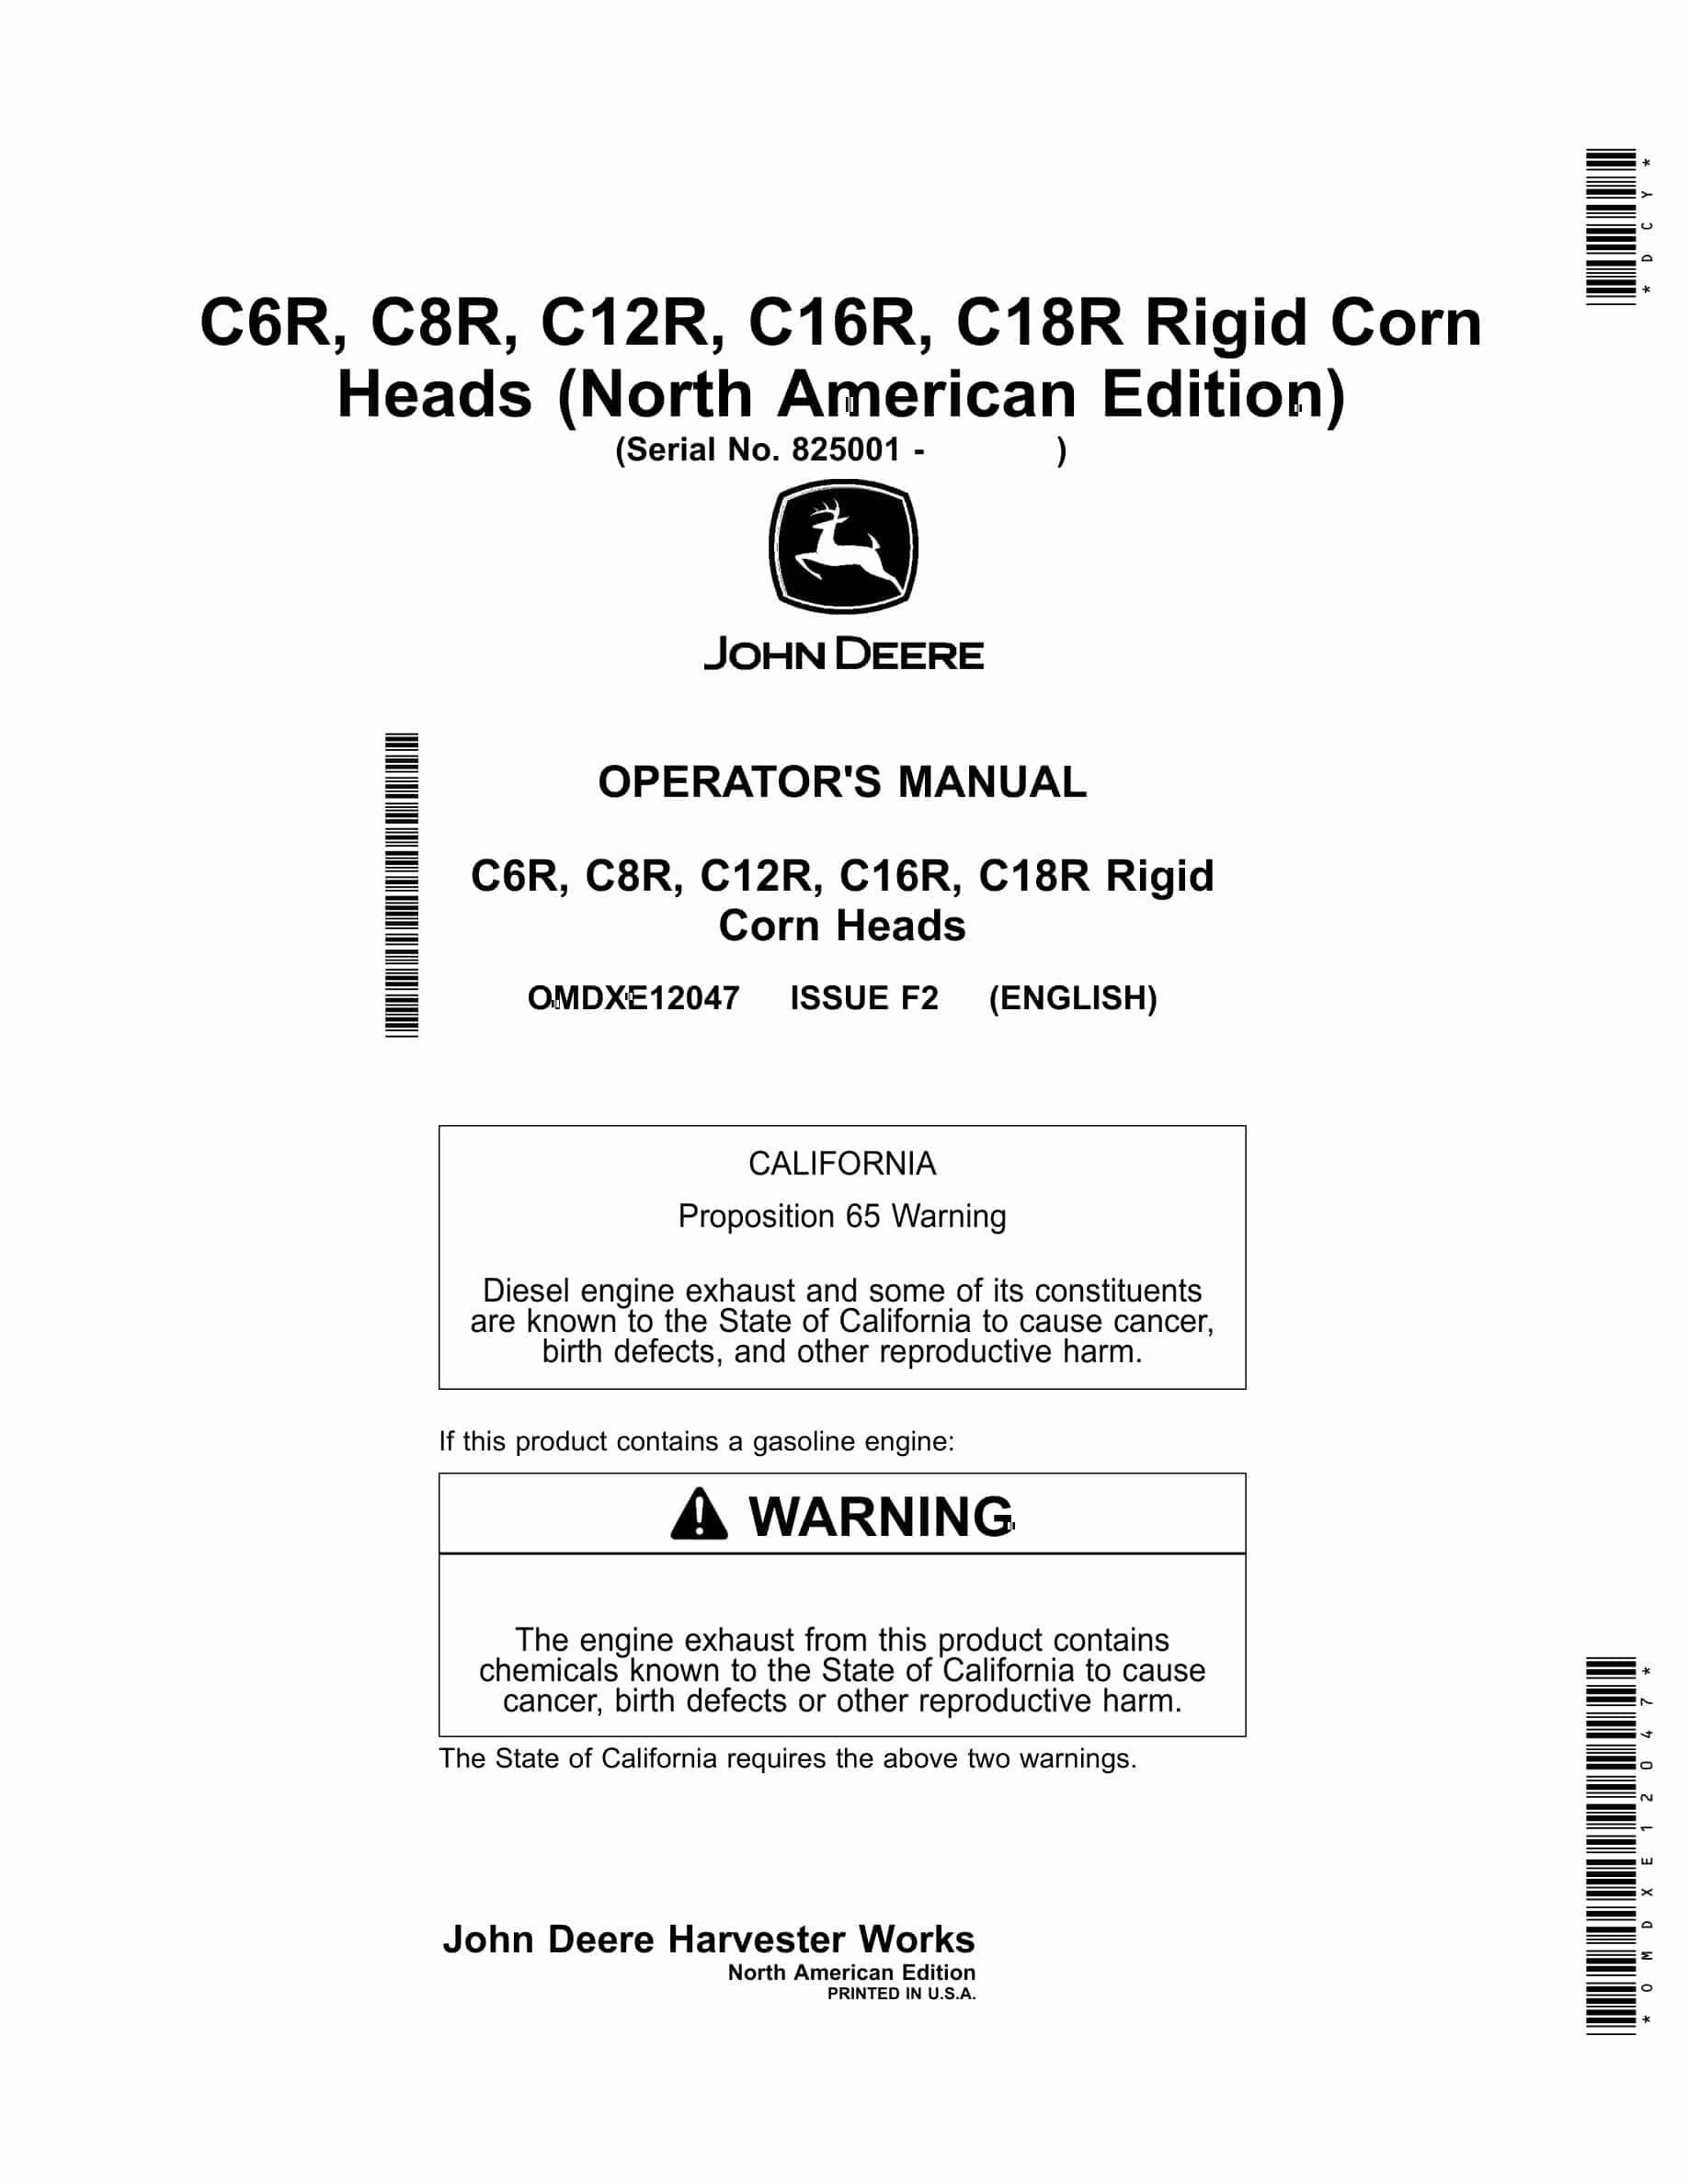 John Deere C6R, C8R, C12R, C16R, C18R Rigid Corn Heads Operator Manual OMDXE12047-1